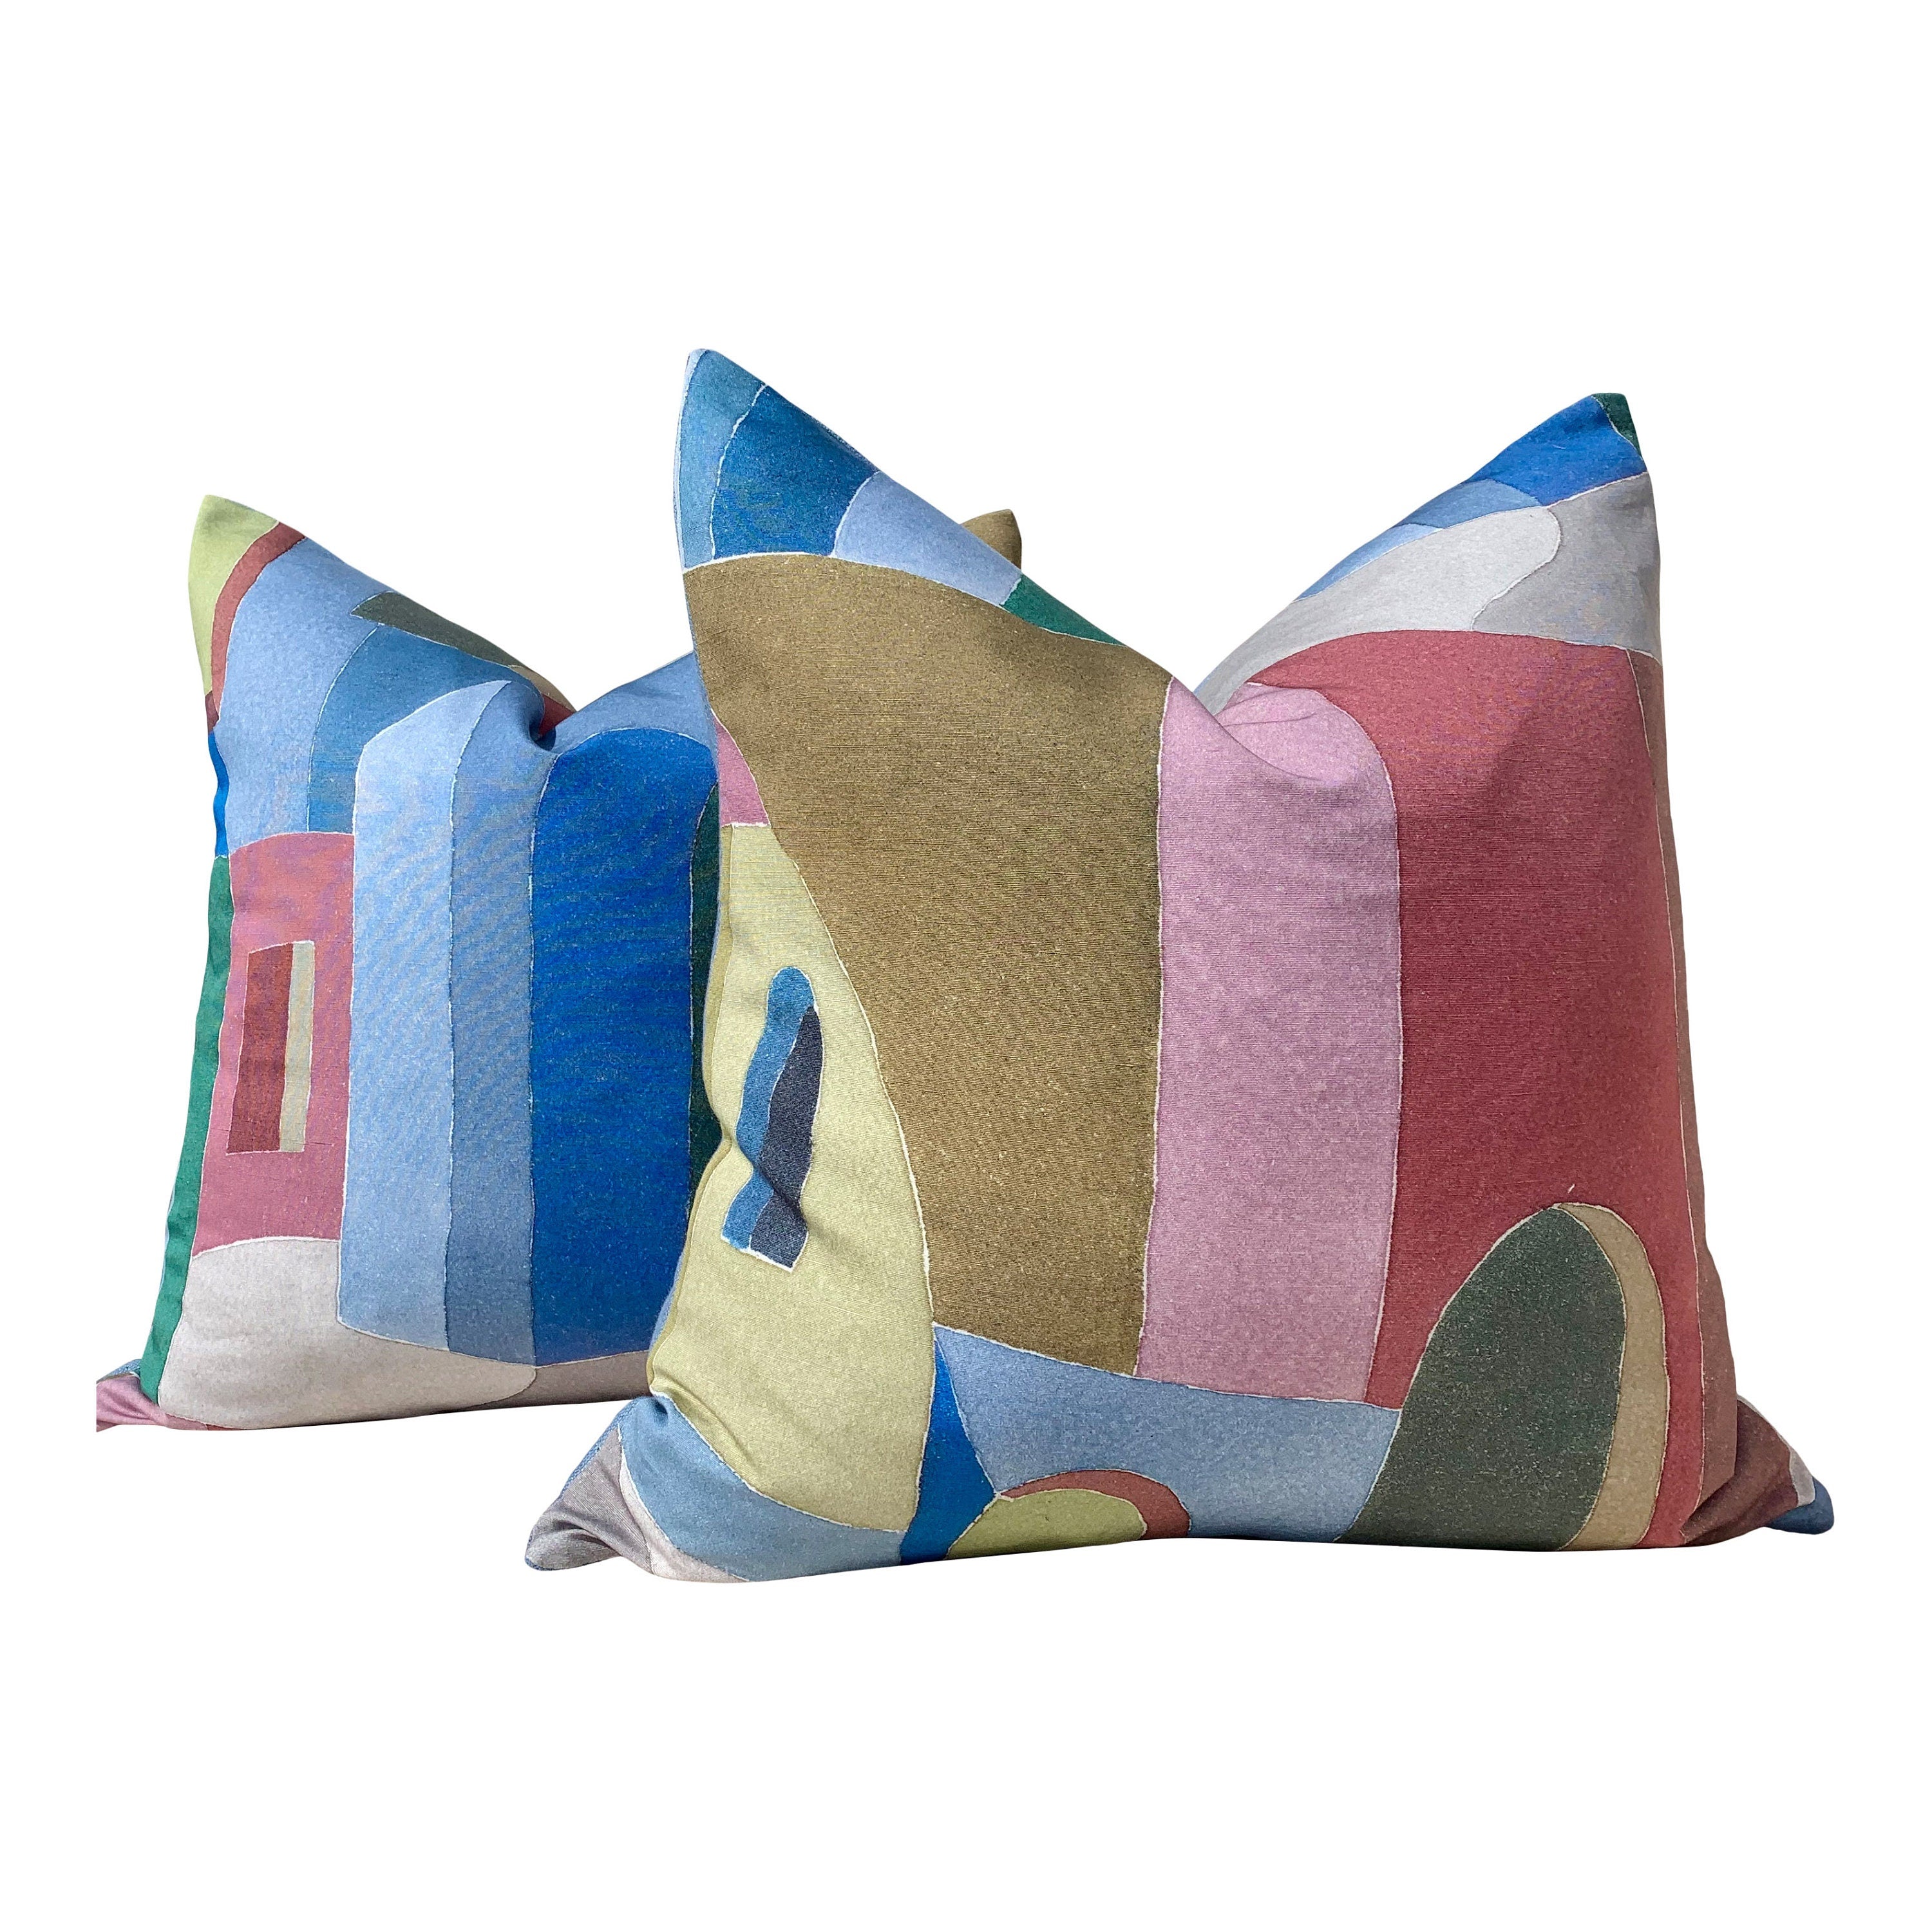 Designer Sahara Pillow in Jewel. Multi Colored Lumbar Pillow // Turquoise Pillow Cover // Euro Sham Pillow // Accent Pillow